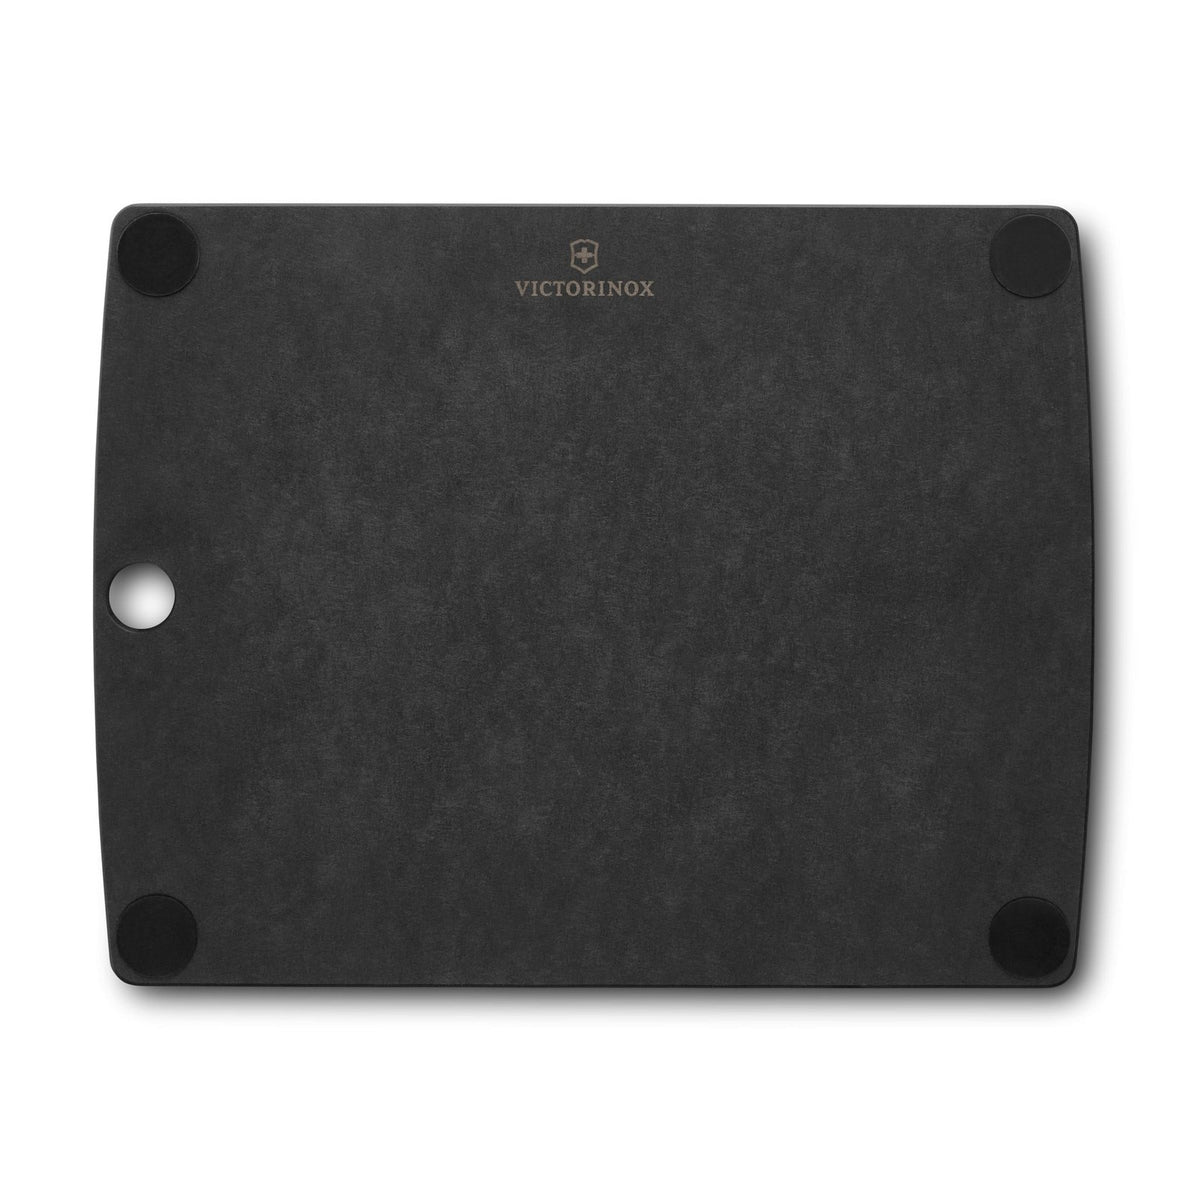 Victorinox All-in-One Cutting Board S, 29 x 23 cm, black